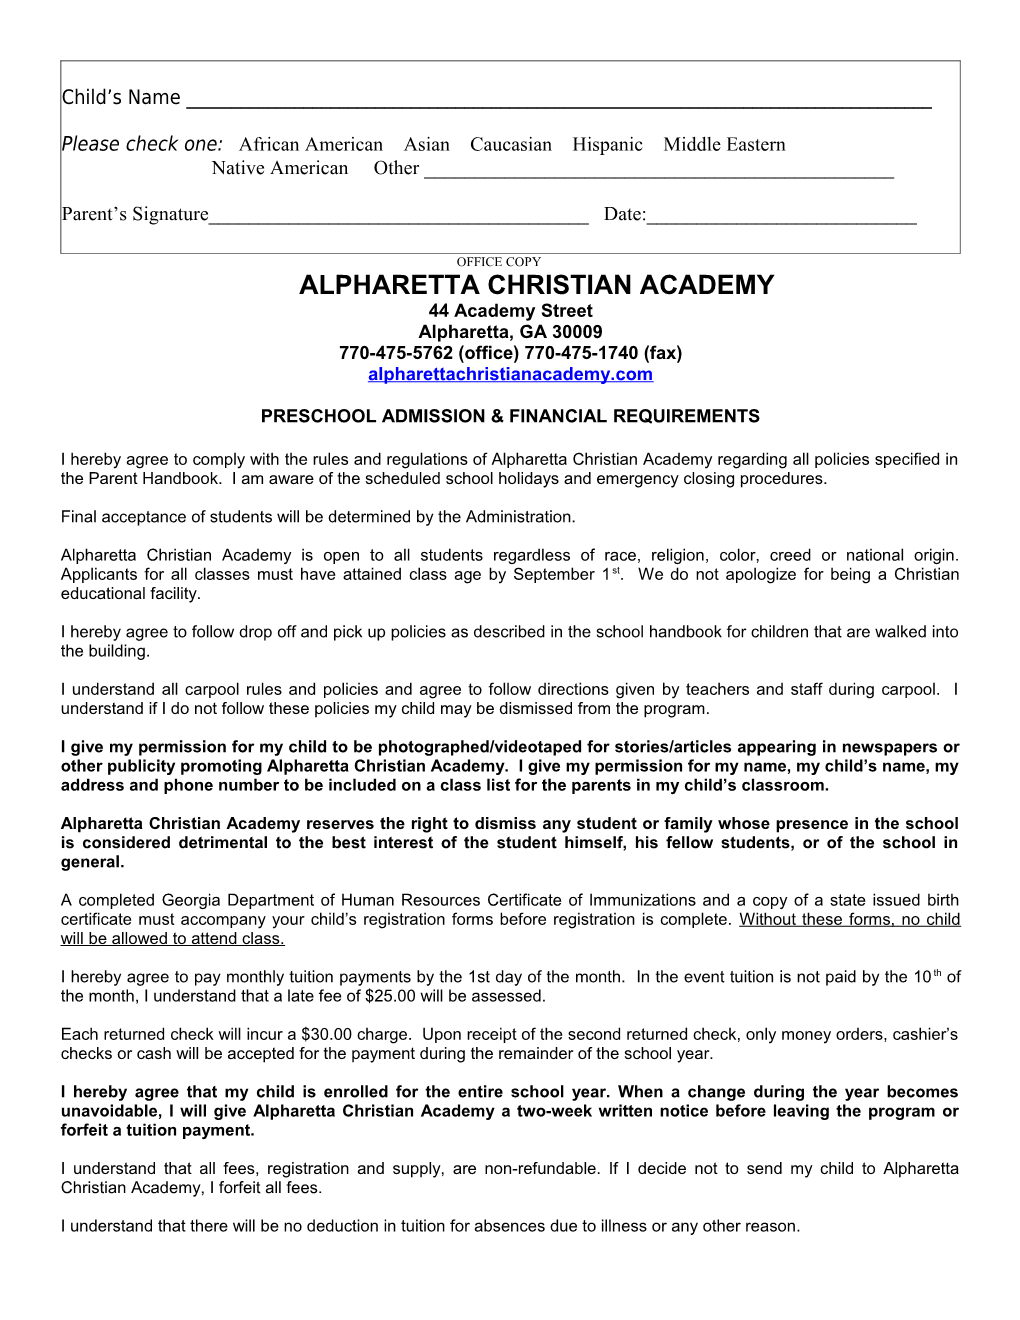 Alpharetta Christian Academy